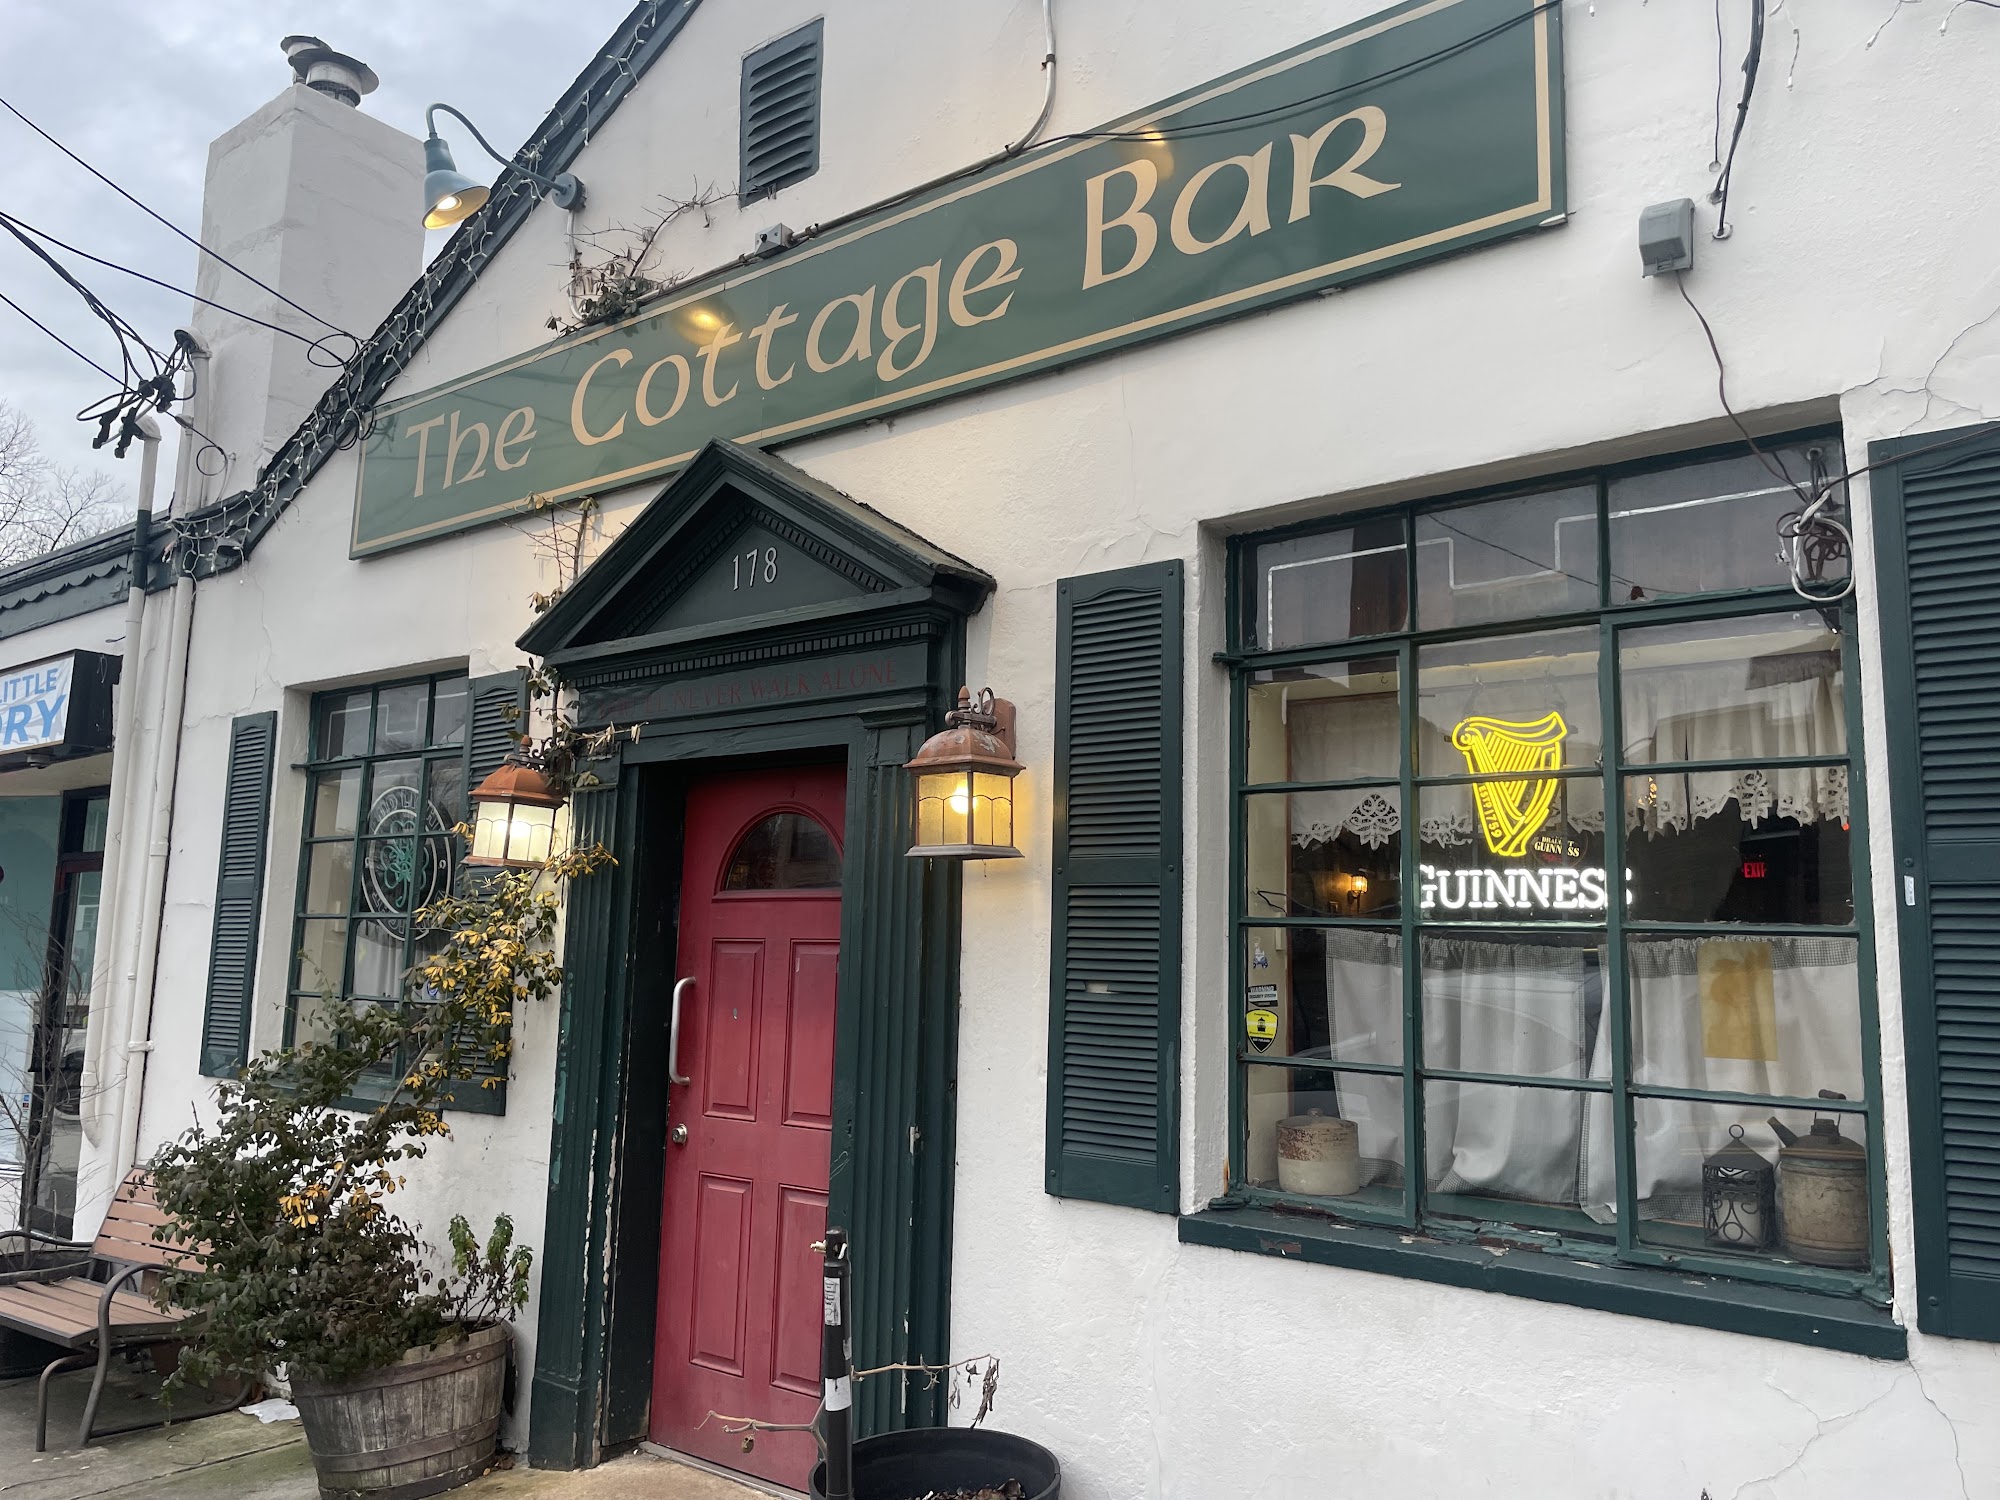 The Cottage Bar